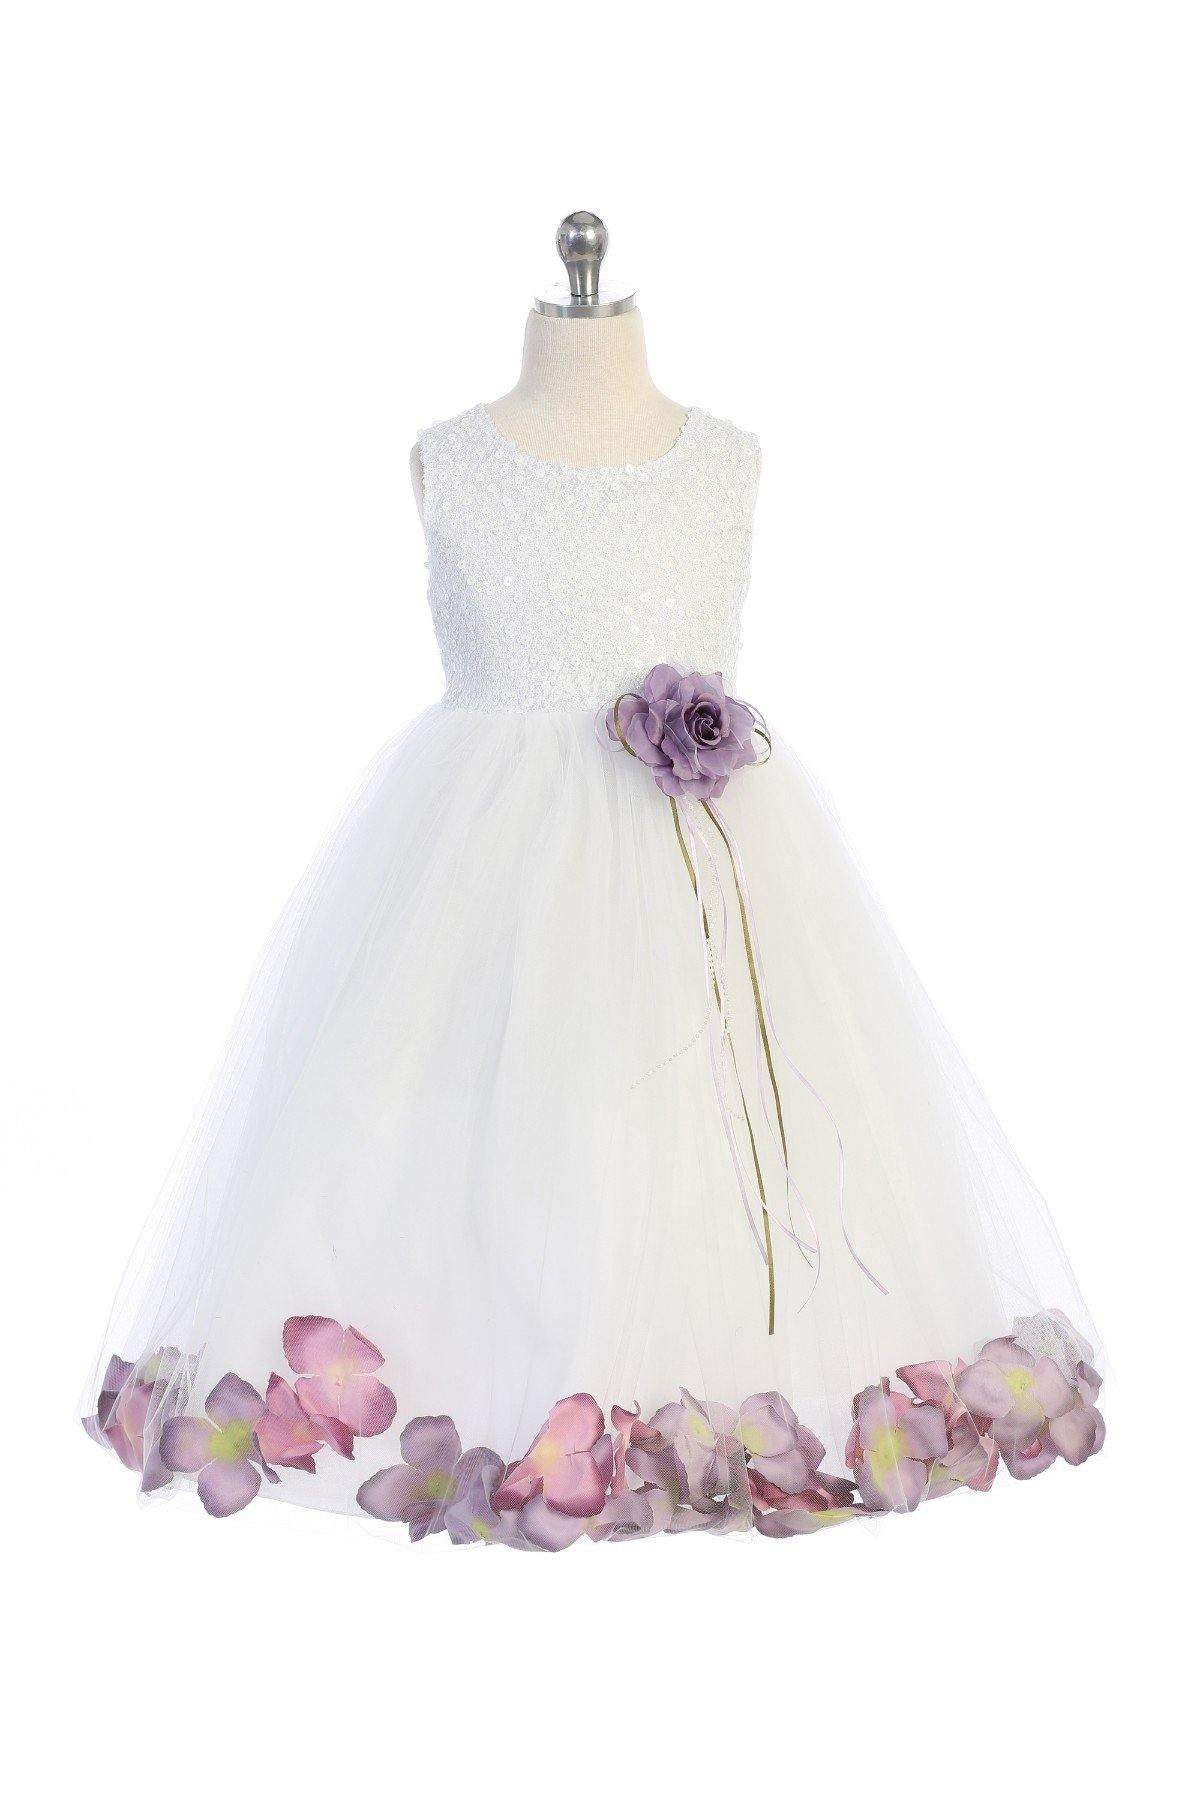 Sequin Top Petal Dress (1of2)-Kid's Dream-big_girl,fabric_Sequin,flower-girl-dresses,girl-dress,length_Tea Length,meta-related-collection-shop-the-outfit-girls,sequin,size_02,size_04,size_06,size_08,size_10,size_12,size_14